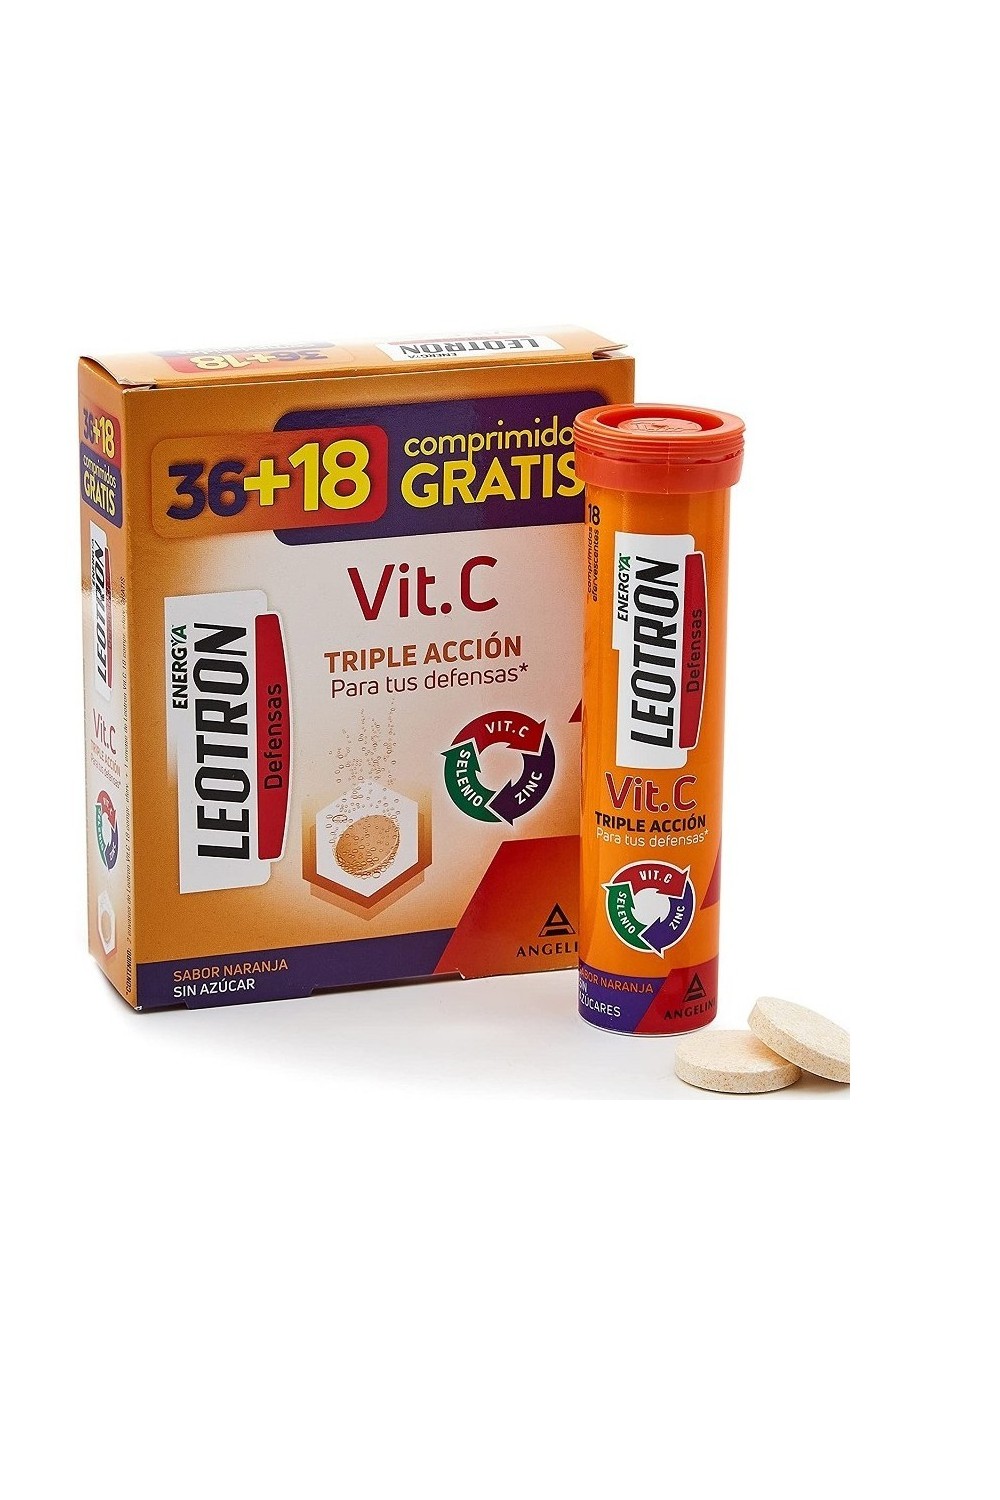 Leotron Vitamin C 36 + 18 Effervescent Tablets